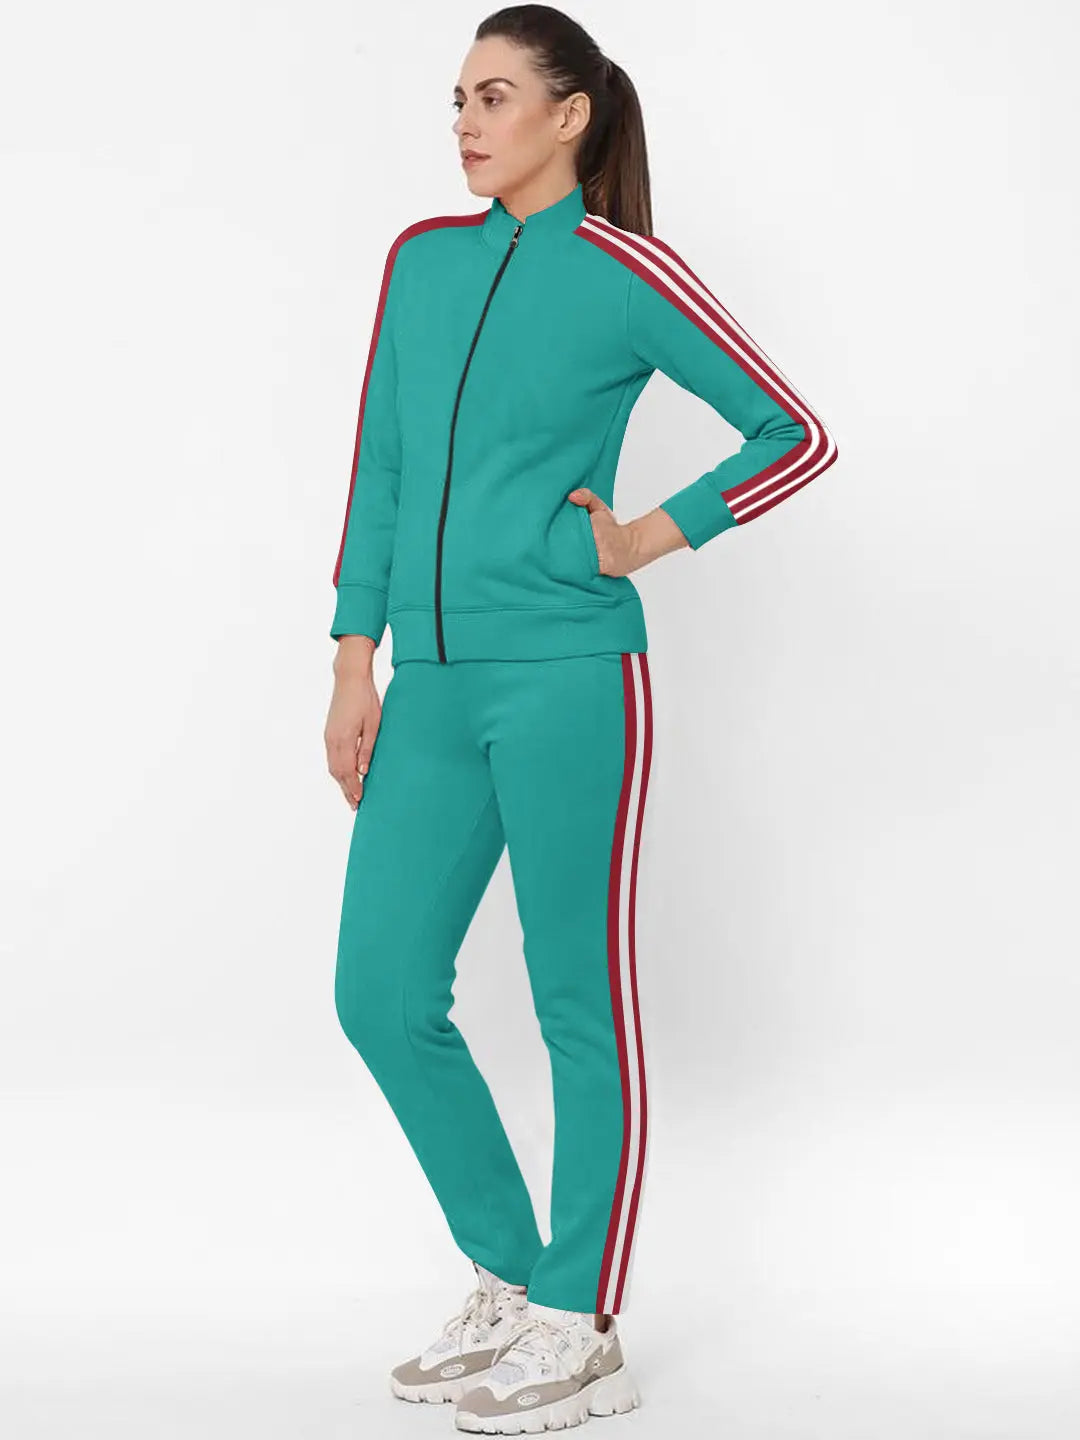 Louis Vicaci Fleece Zipper Tracksuit For Ladies Zinc with Red Stripe-SP294